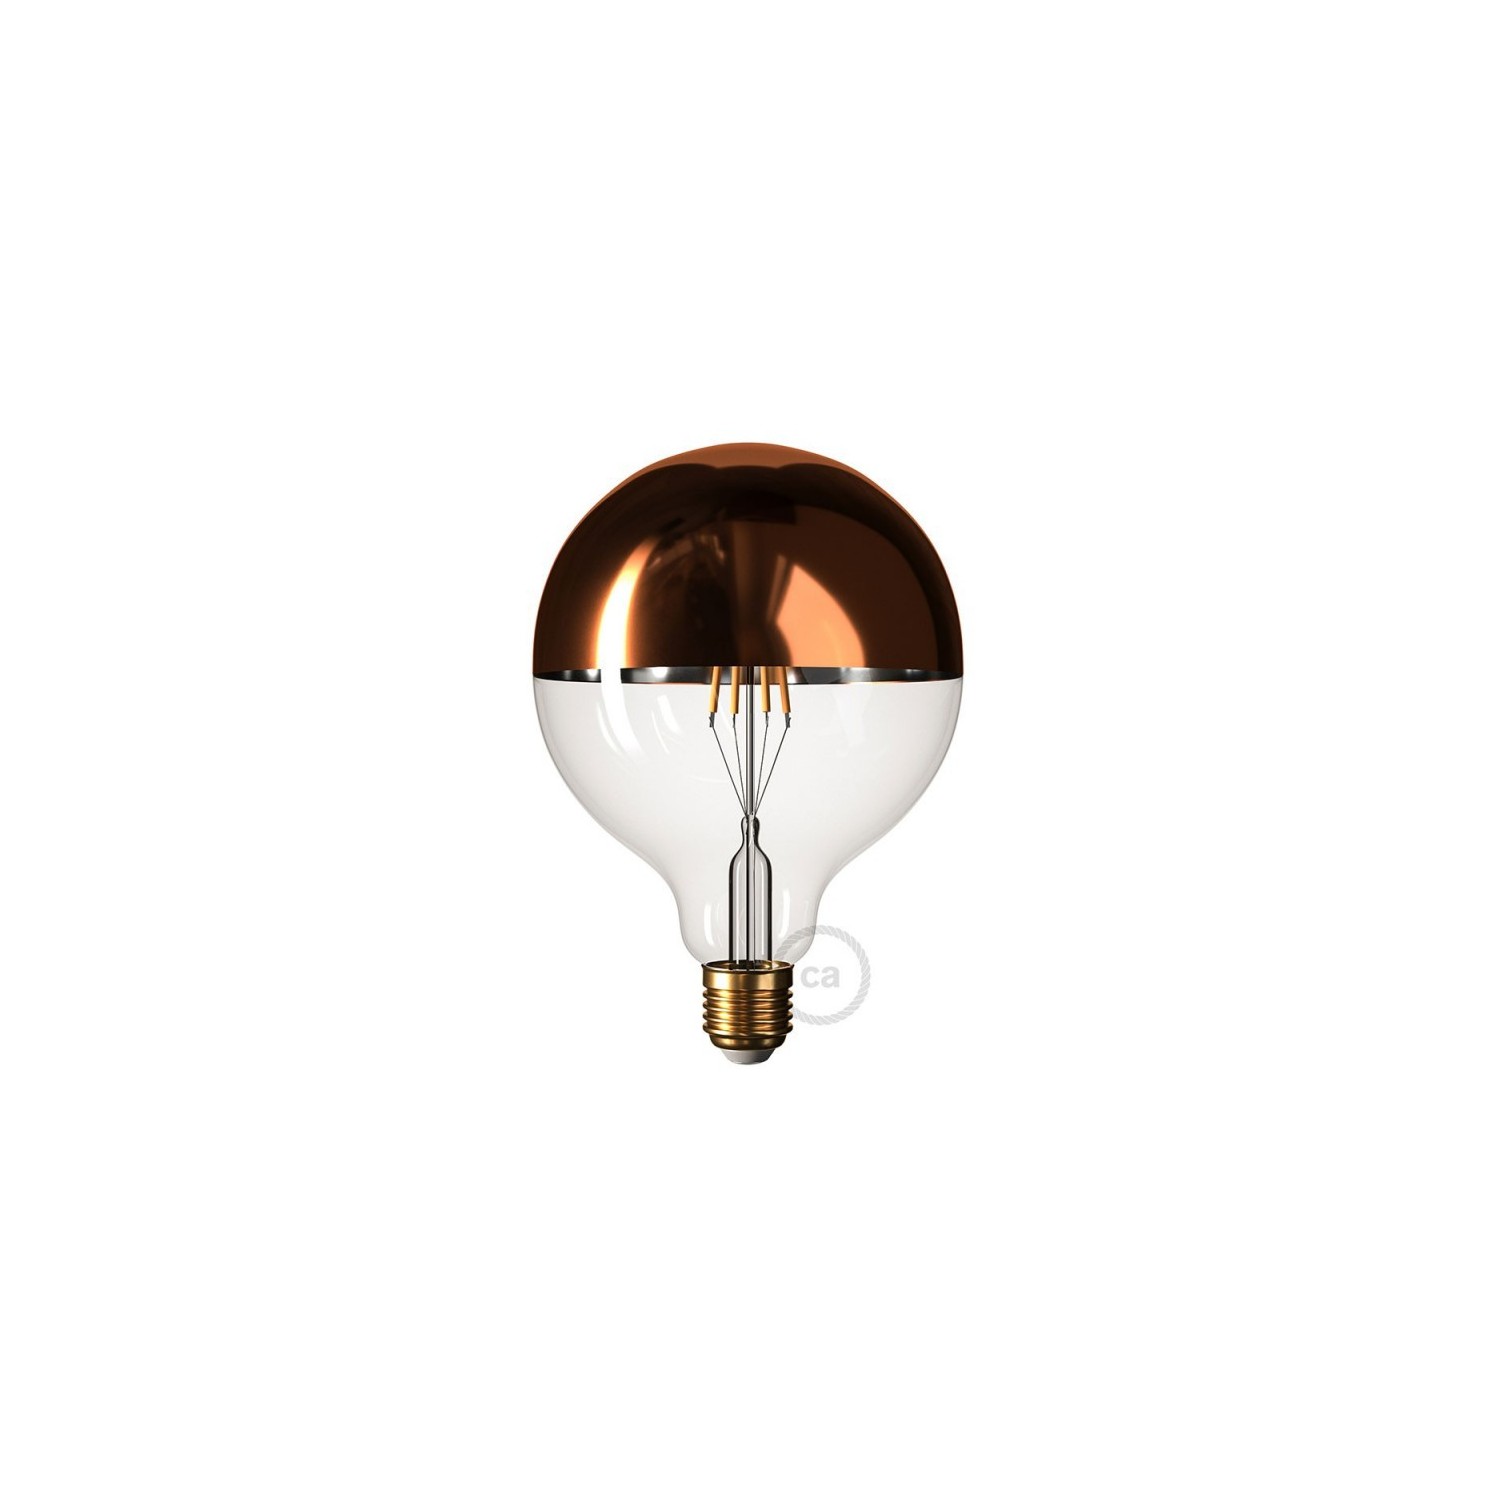 Bombillo LED globo de 12.5cm de diámetro media esfera cobre de 8 watt y luz cálida dimerizable